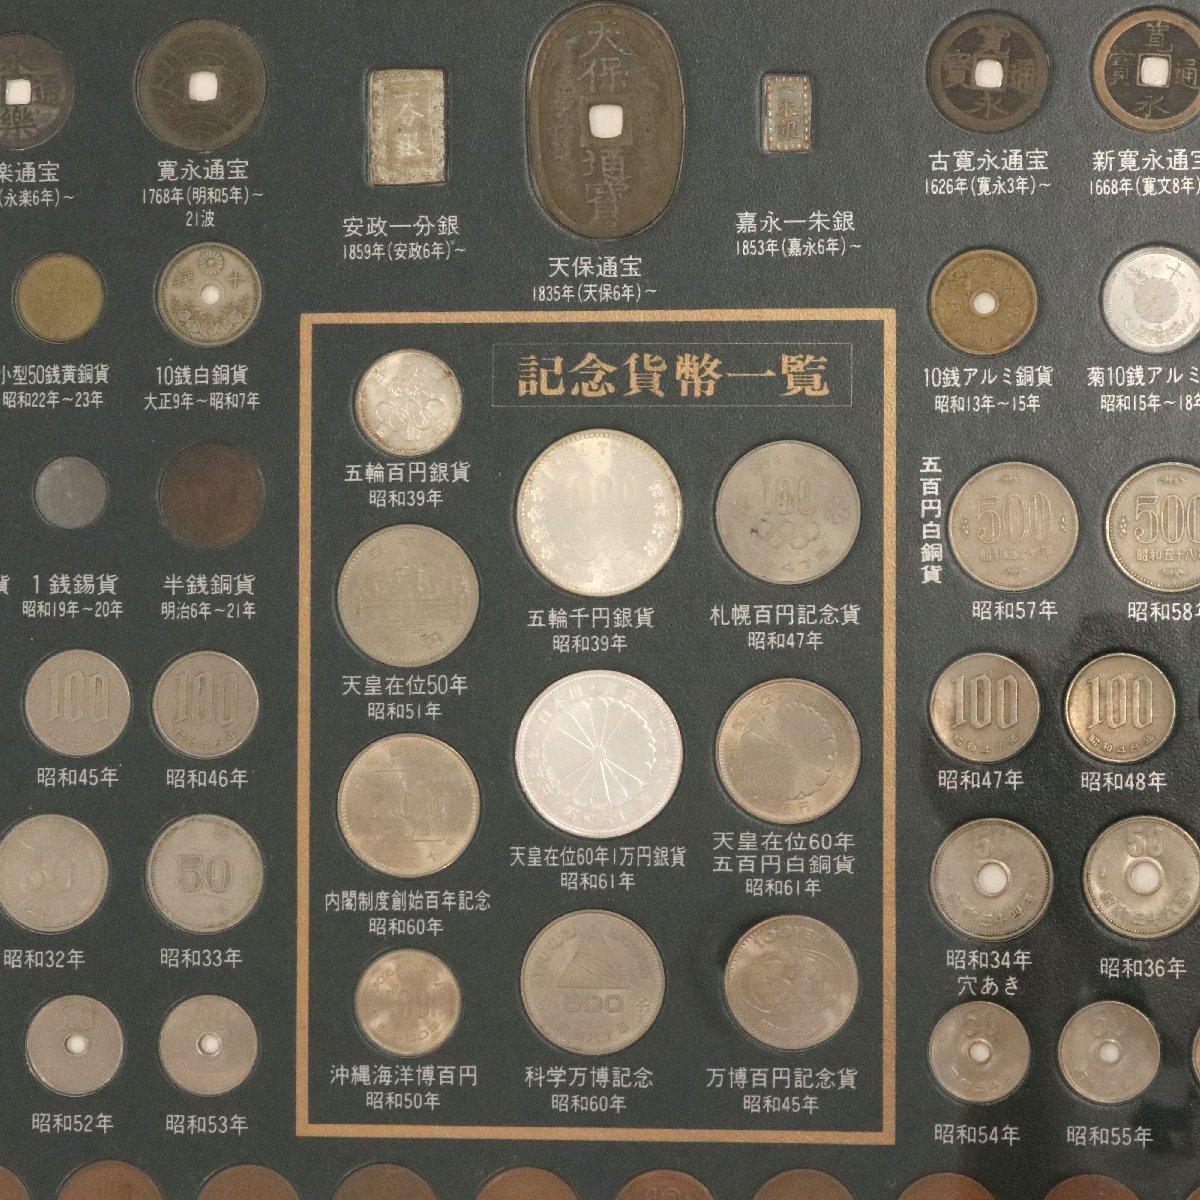 ⭐︎日本貨幣史一覧 記念硬貨等⭐︎-